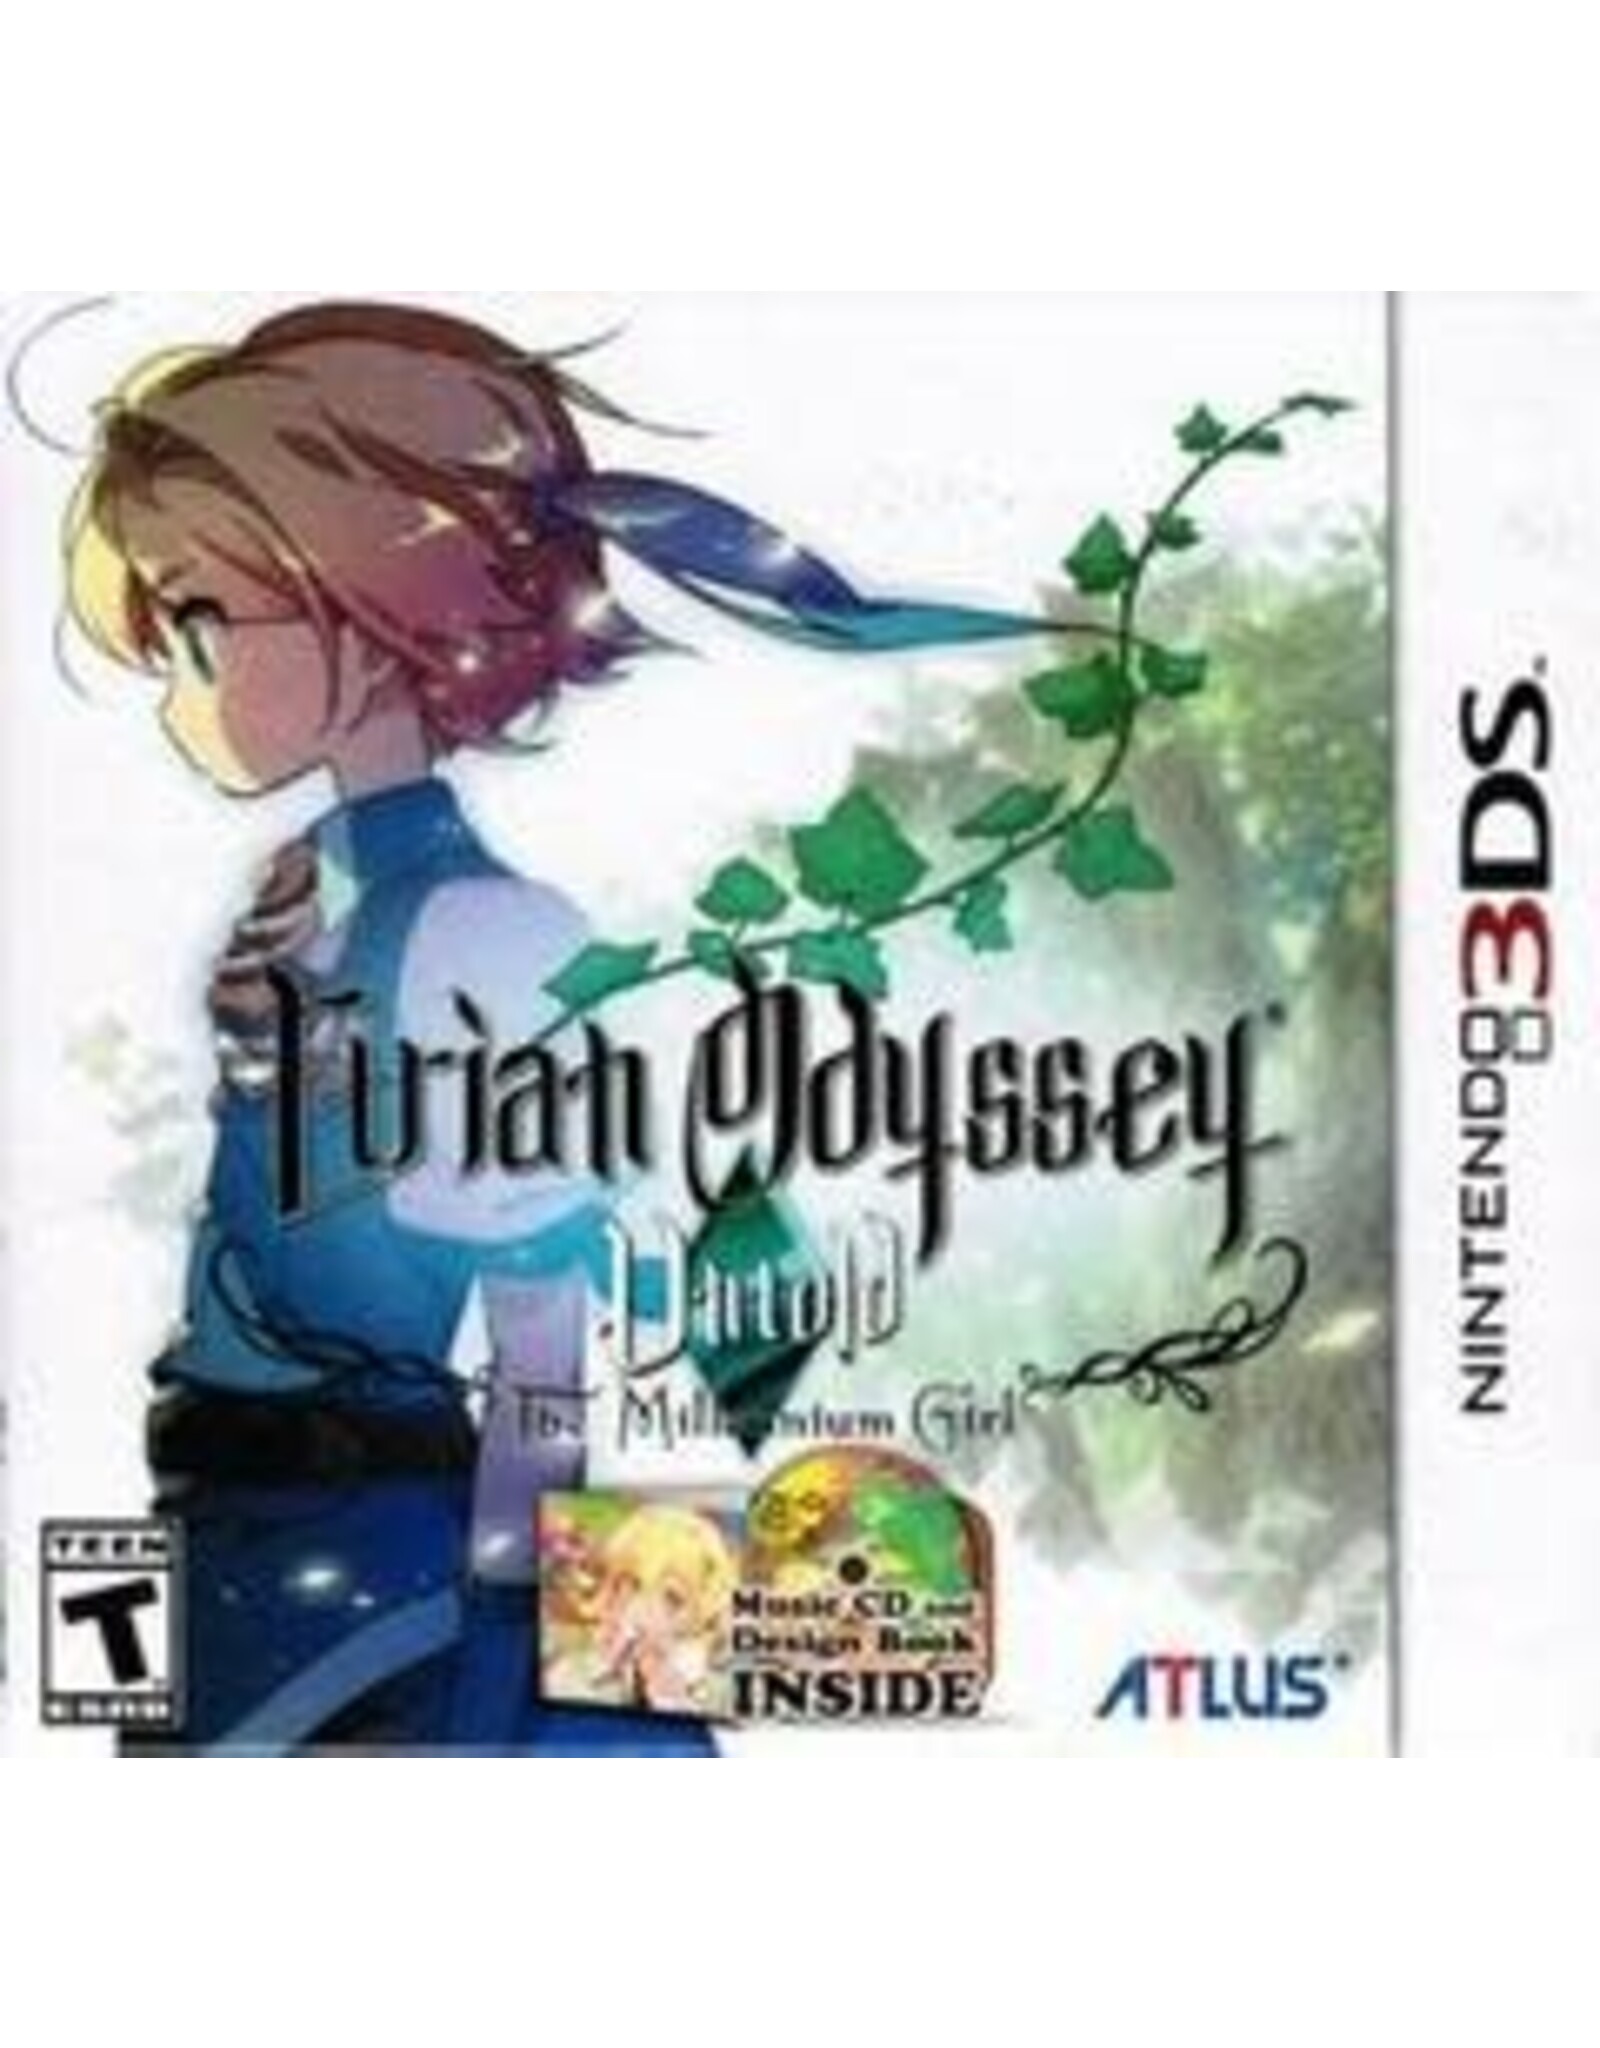 Nintendo 3DS Etrian Odyssey Untold: The Millennium Girl Soundtrack Bundle (Brand New)